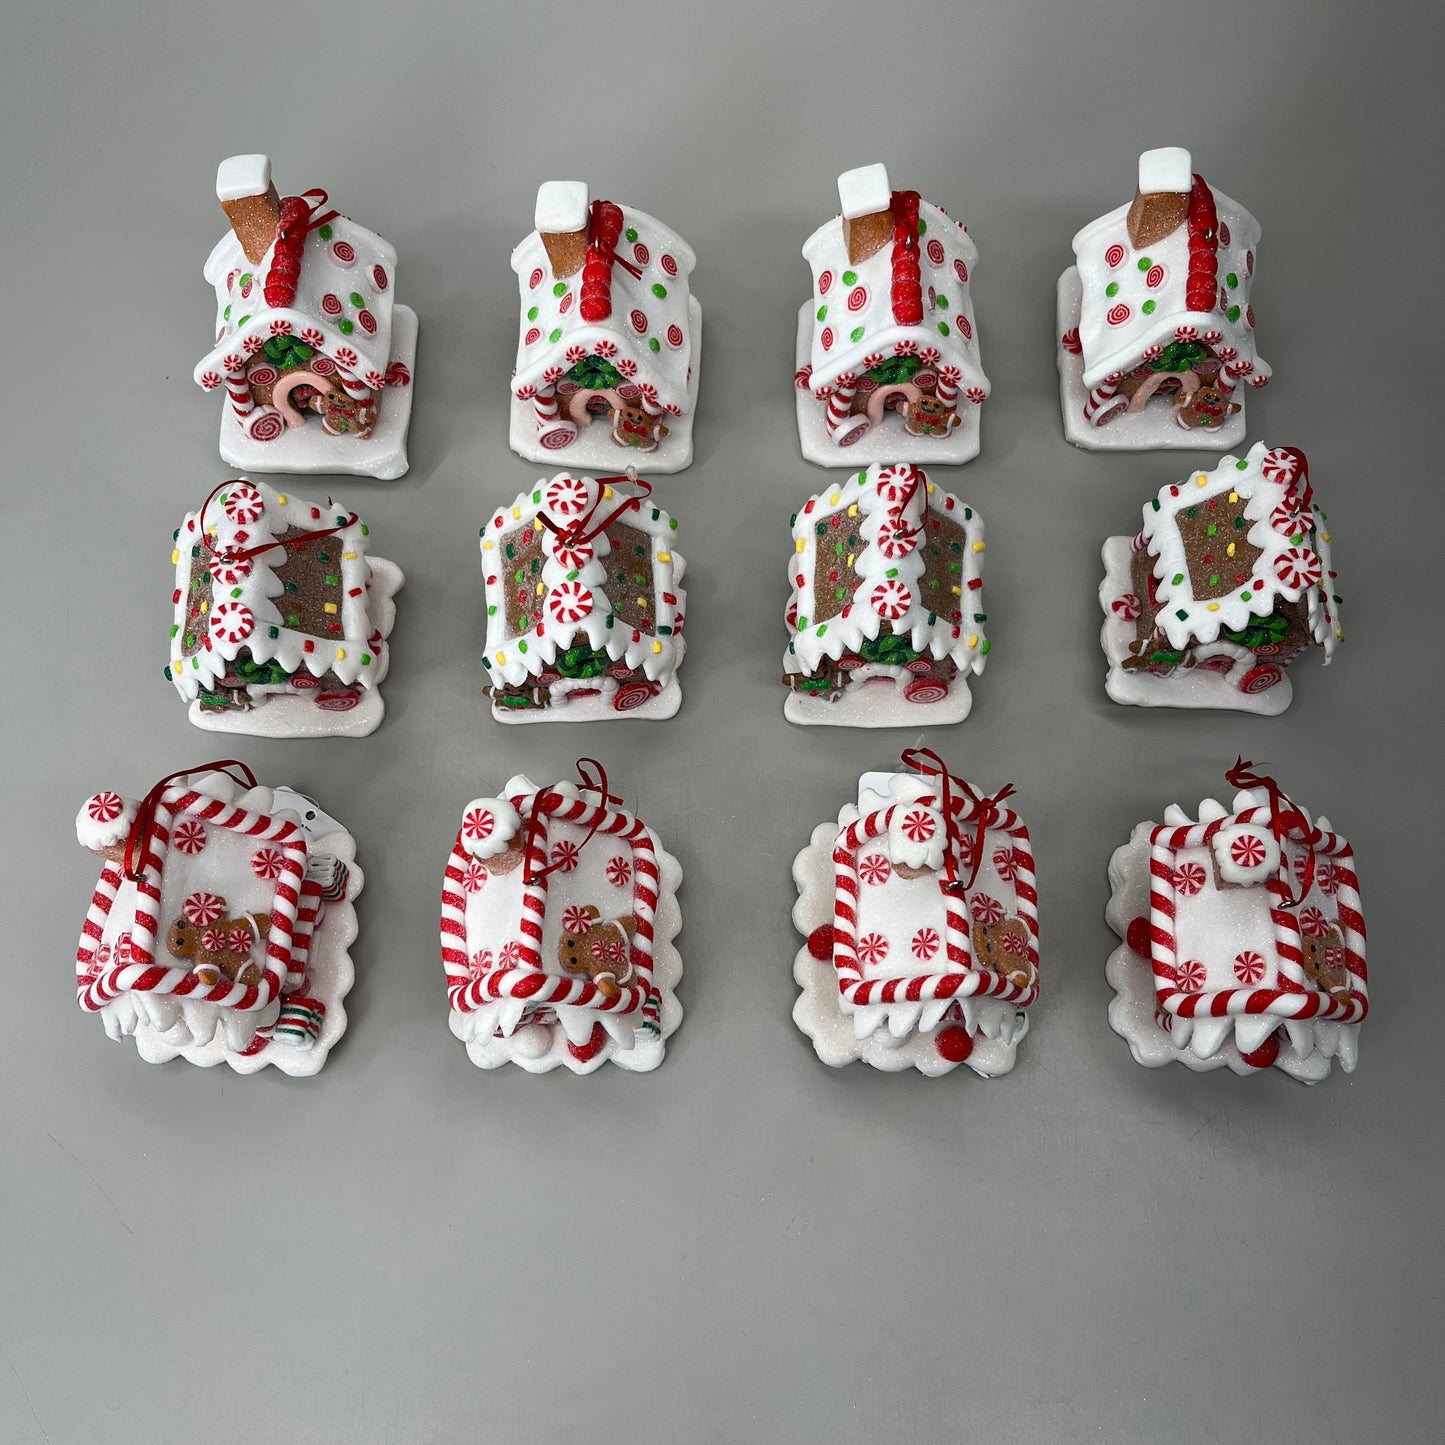 ZA@ RAZ IMPORTS 12-PK Christmas Holiday 3.25" LED Lighted Gingerbread House Ornament 3815534 (New)